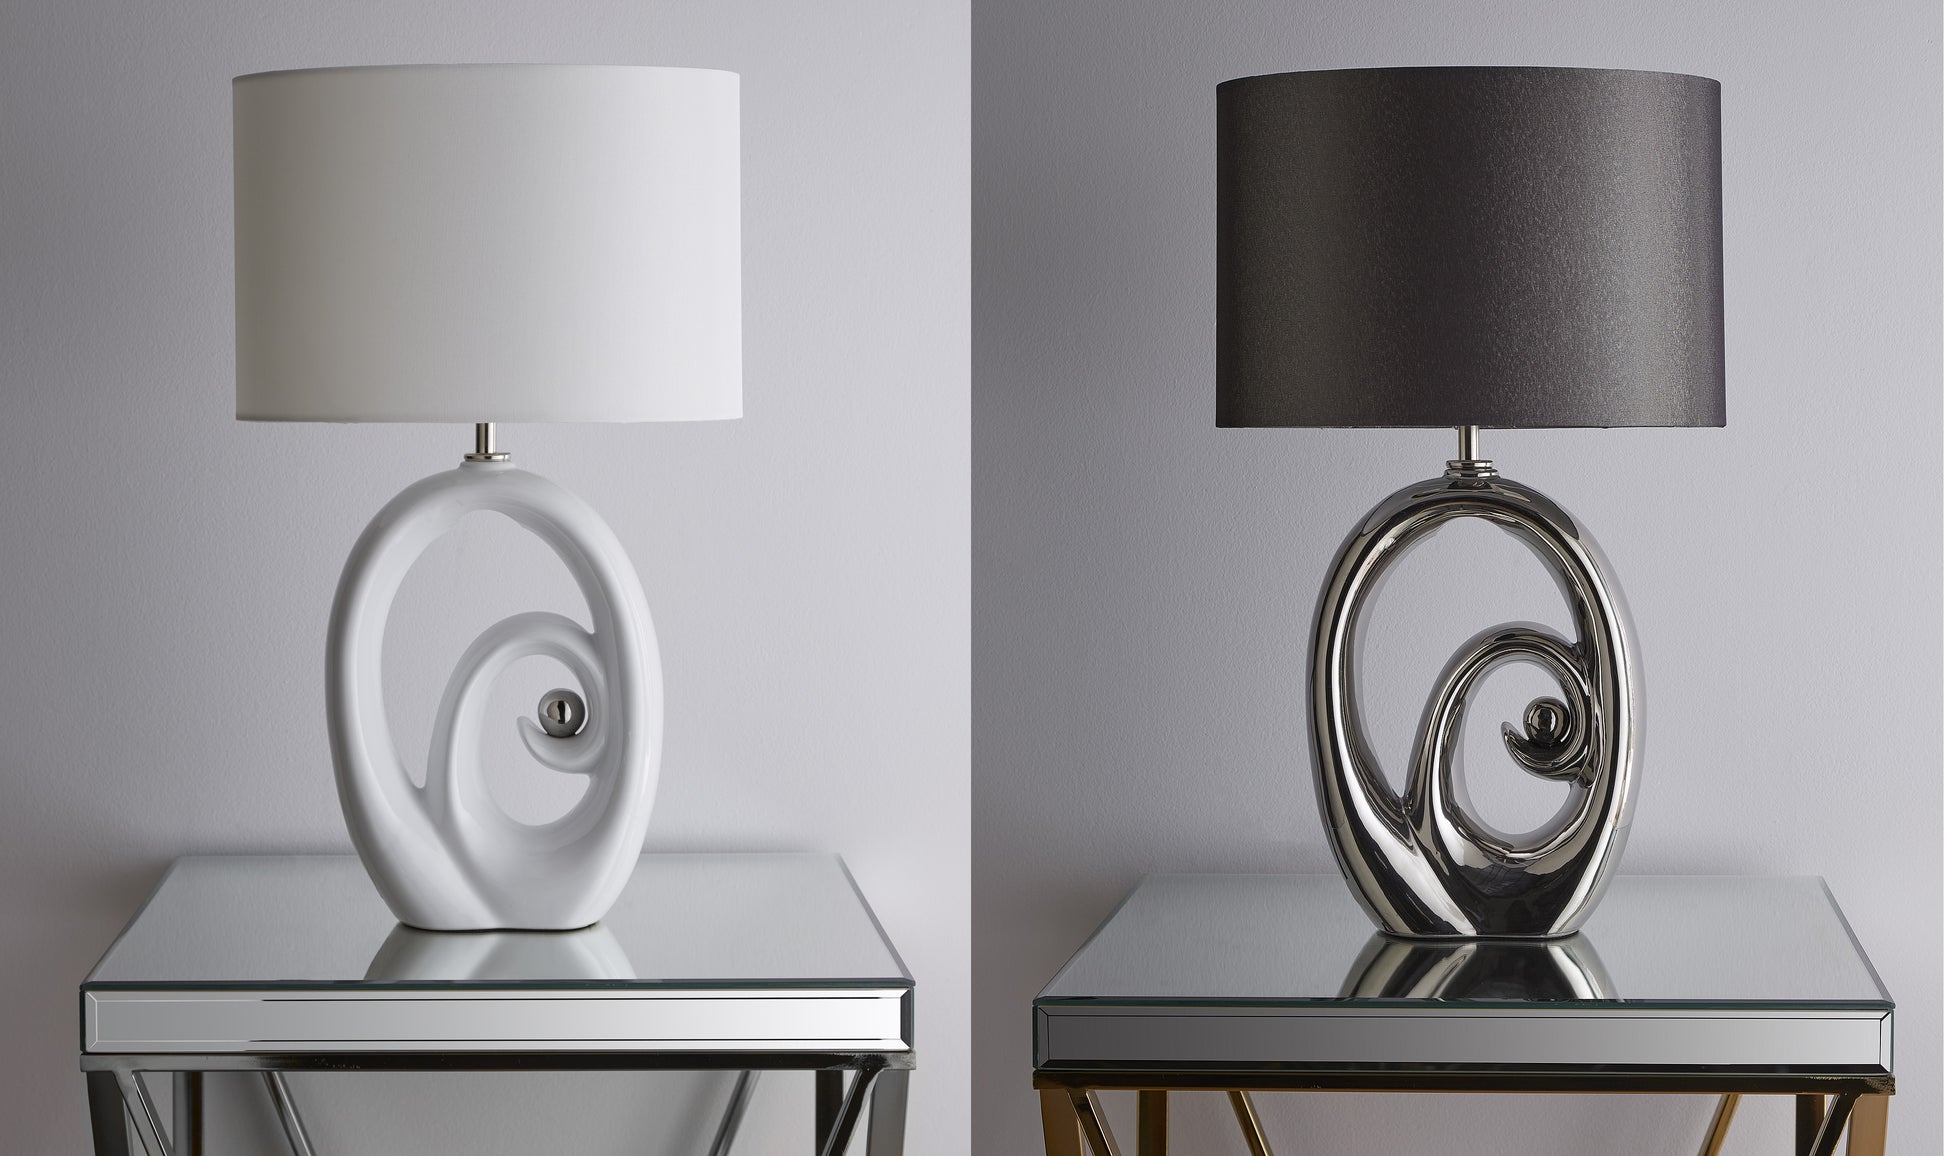 Mara 52cm Ceramic Table Lamp With Matching Shade